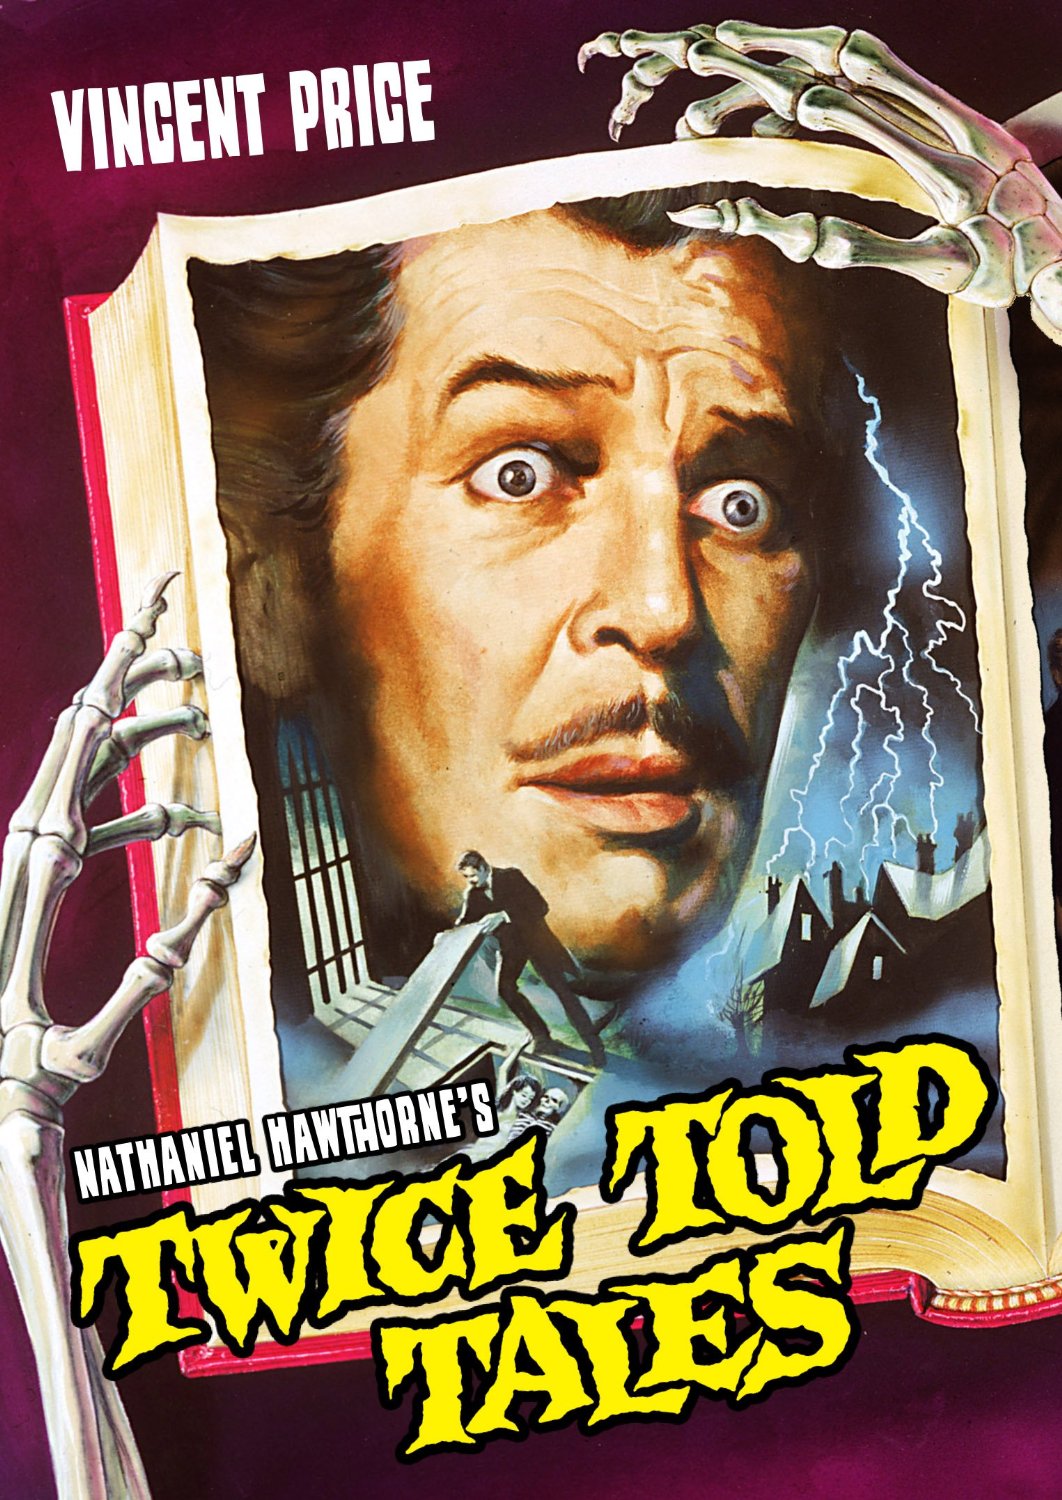 Twice Told Tales (196?) starring Vincent Price, Sebastian Cabot, Beverly Garland, Richard Denning, Jacqueline de Wit